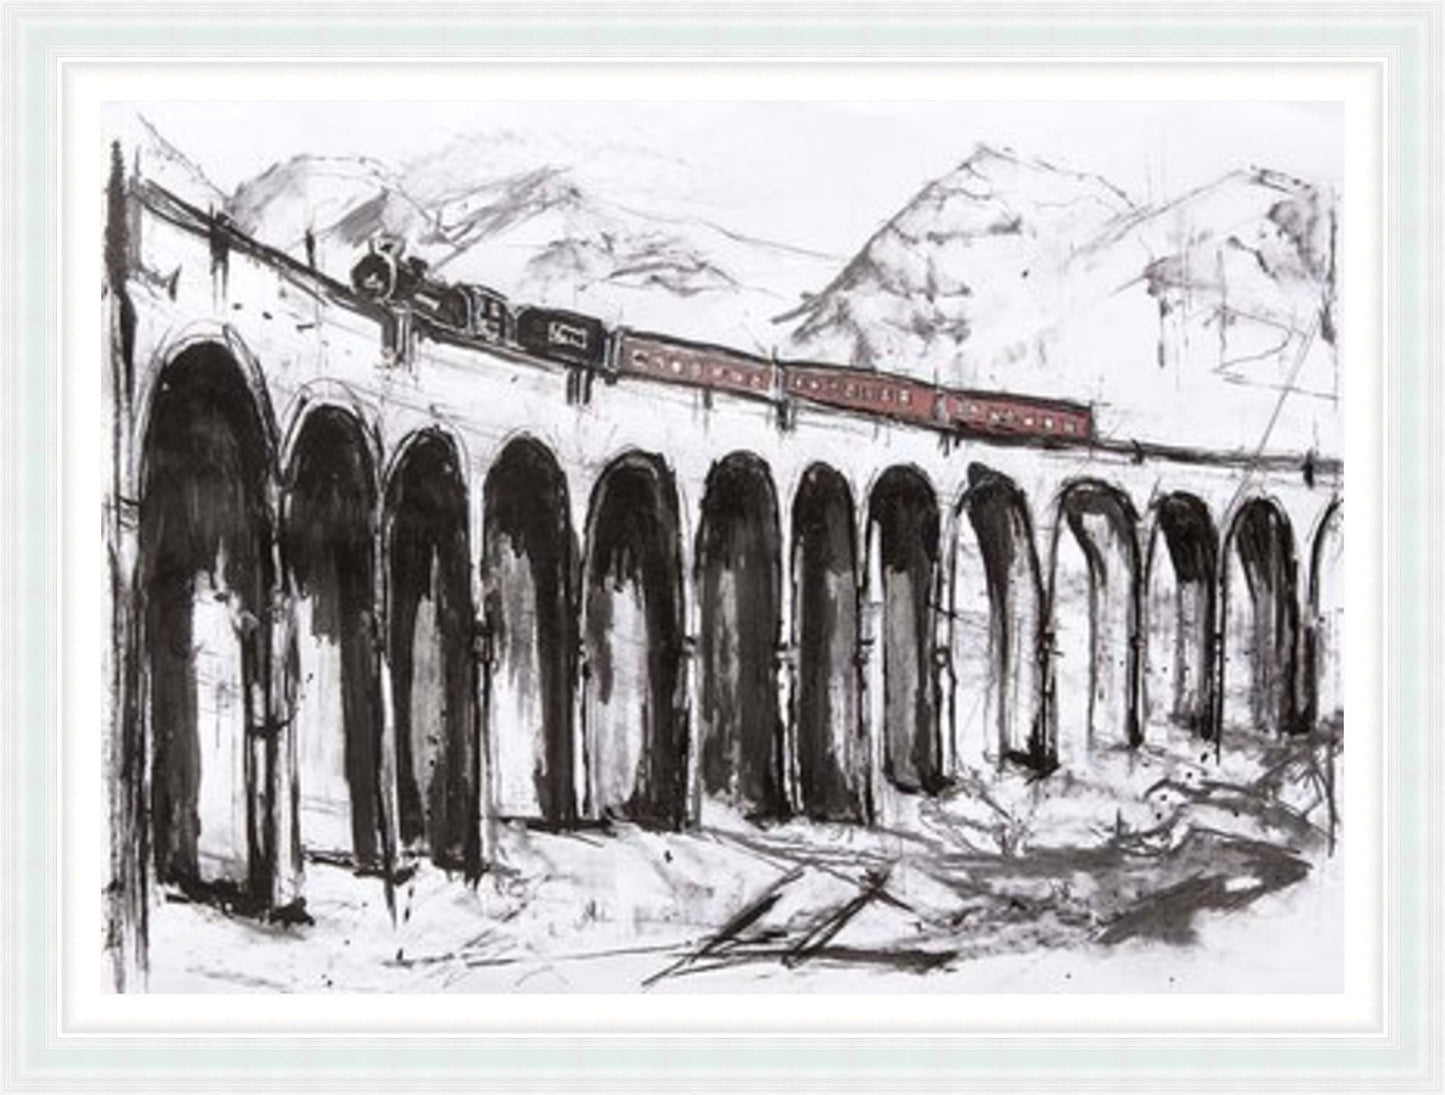 Glenfinnan Viaduct by Liana Moran